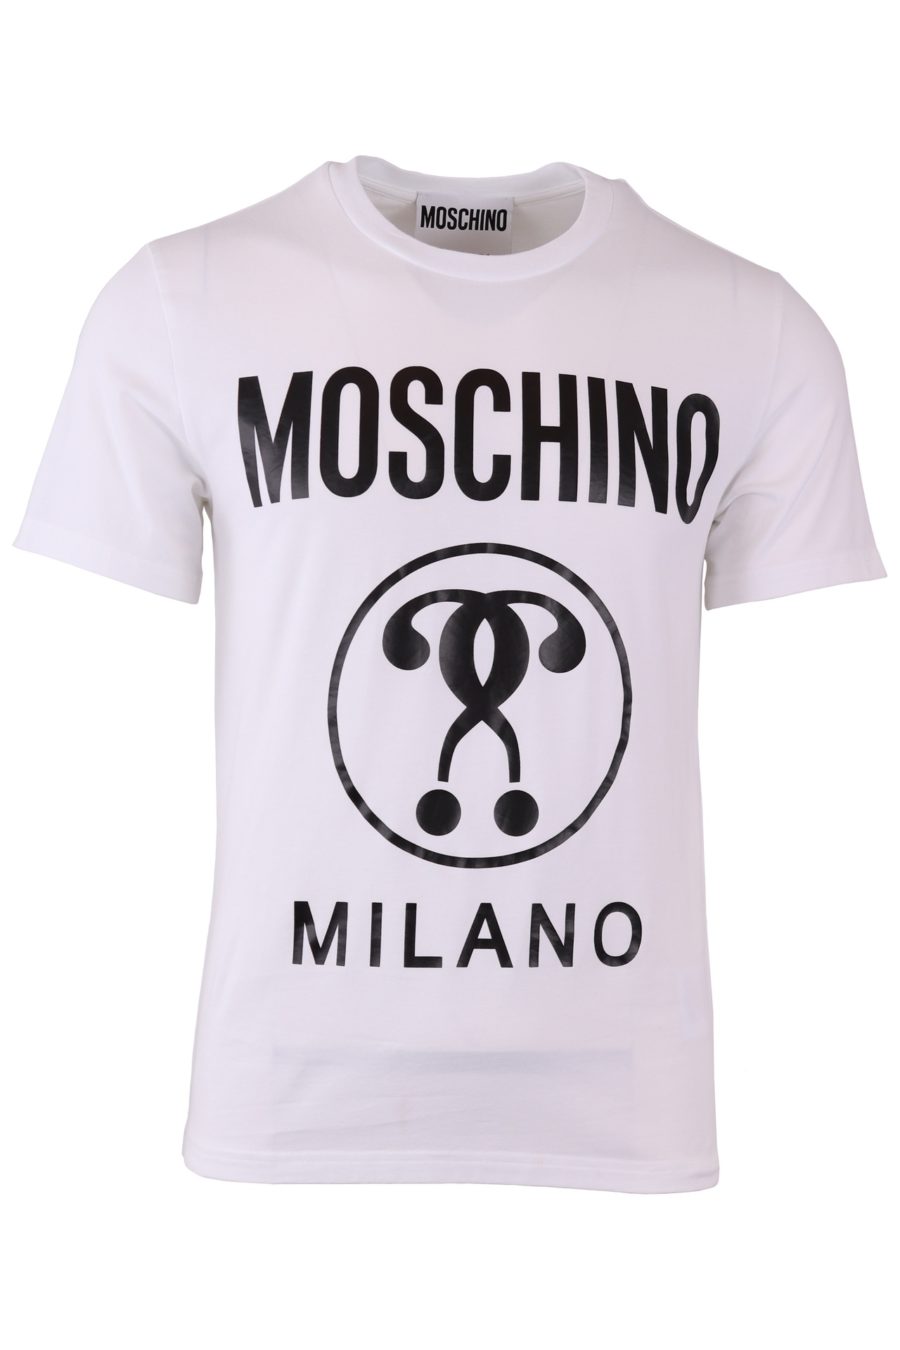 Camiseta Moschino Couture blanca con logo y doble pregunta delantera - f499dbb72ce14f8fbd252834b53975ae212ac0b9